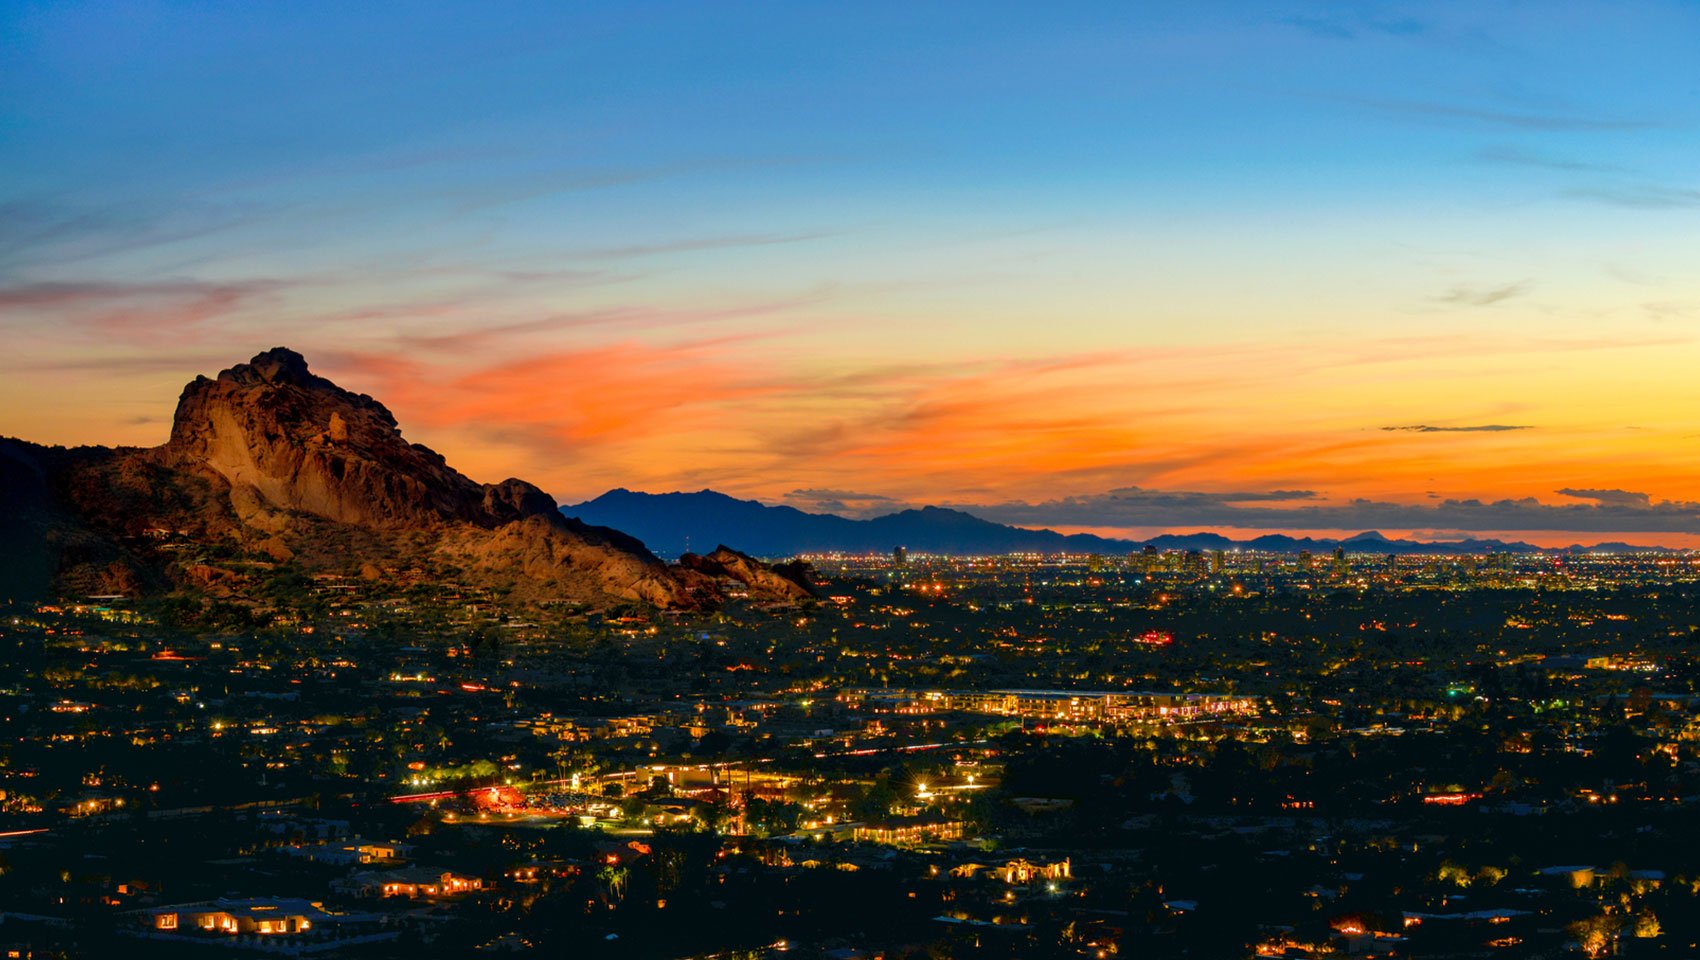 Sun setting over the Phoenix mountain skyline